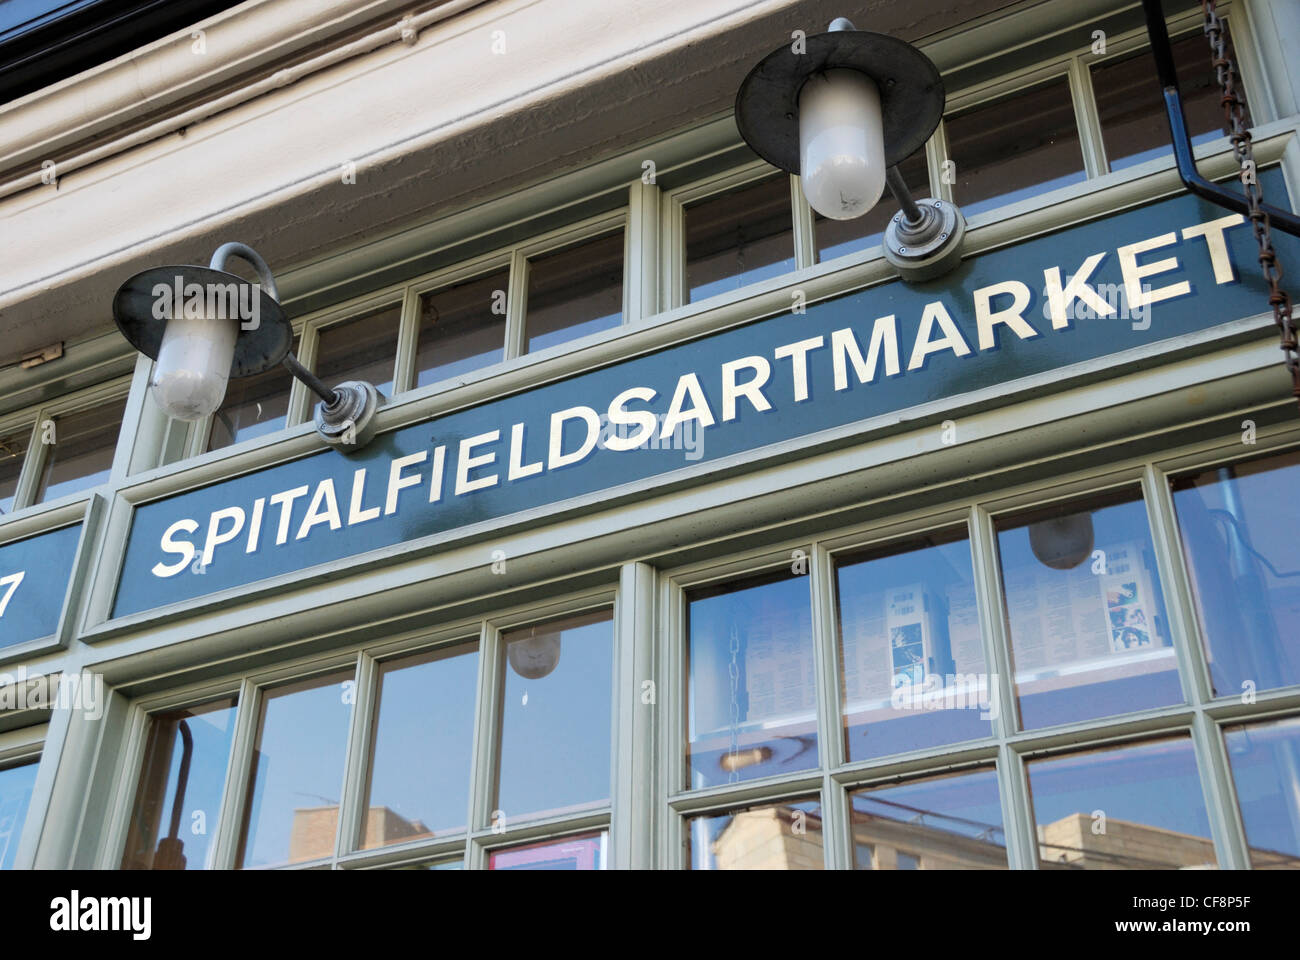 Spitalfields Art Market sign, London, England Stock Photo